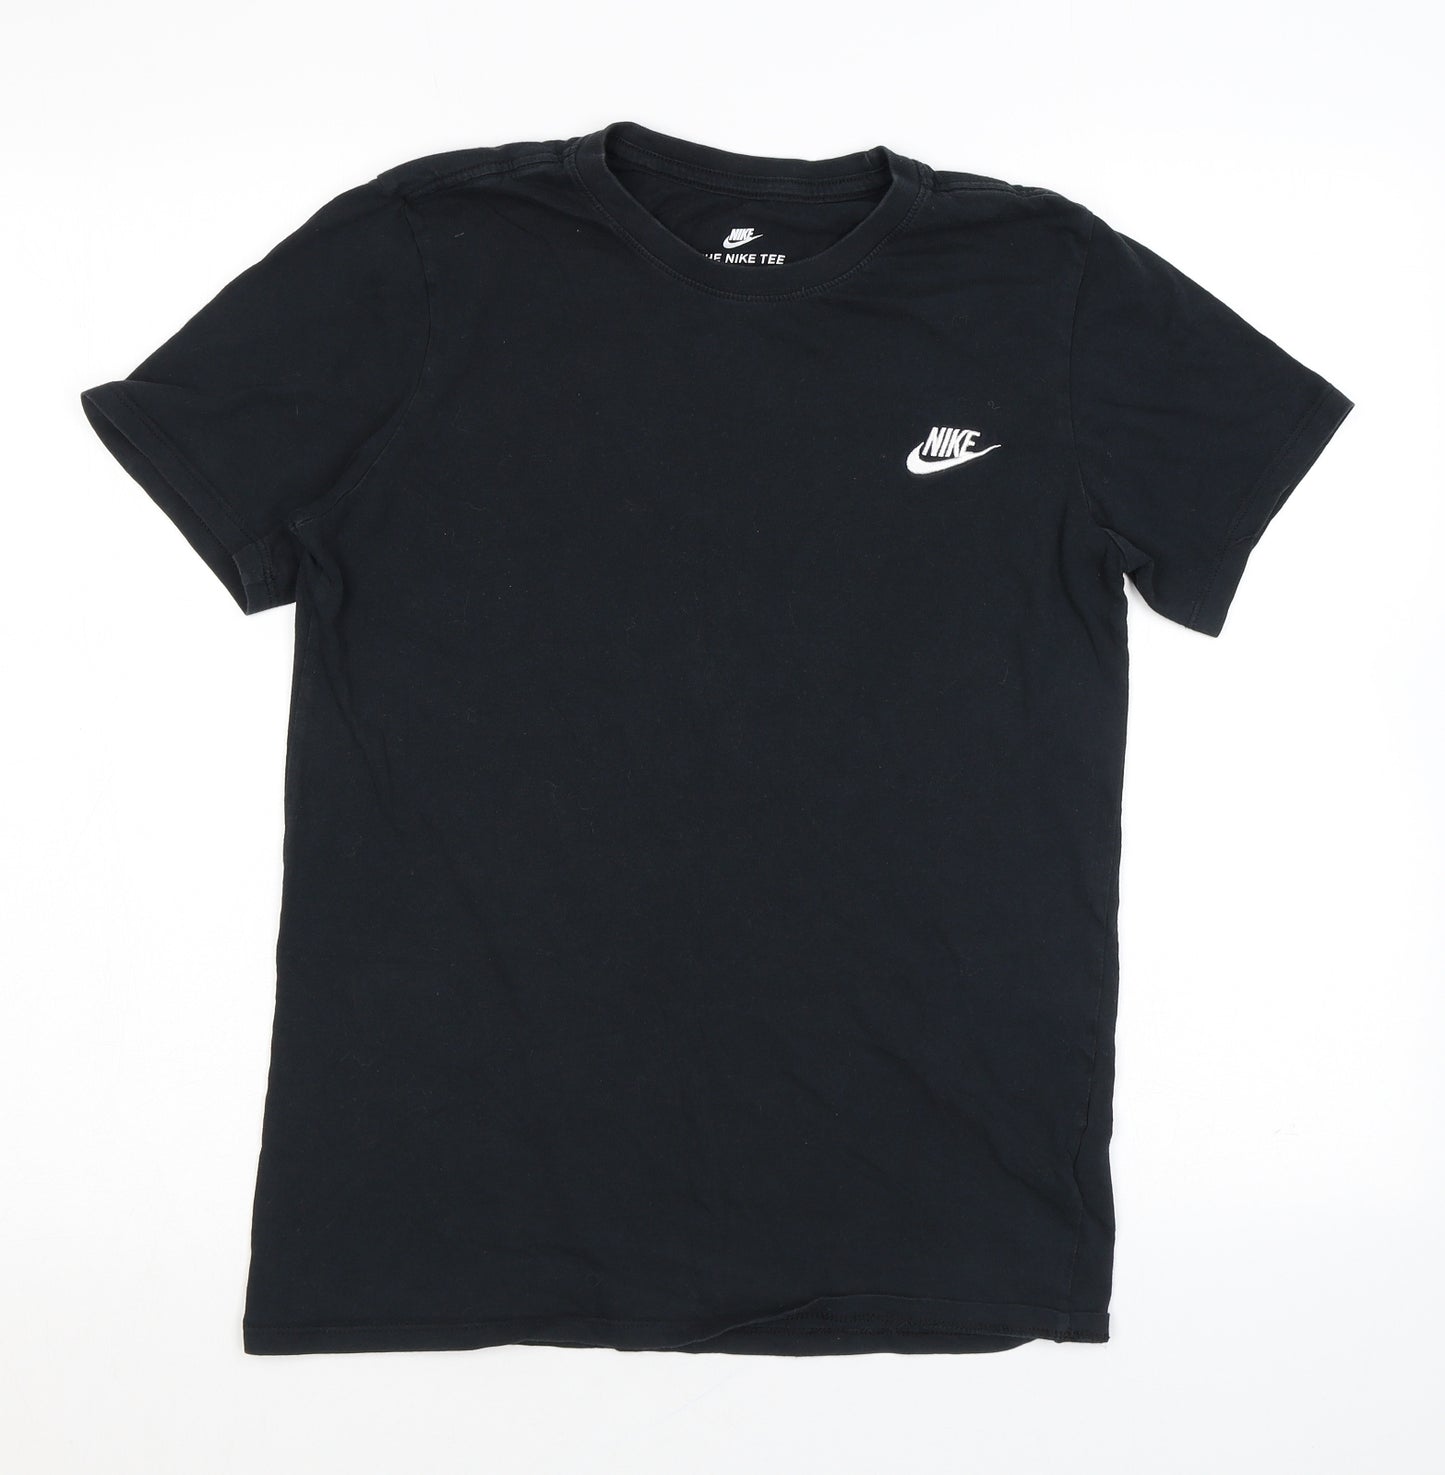 Nike Mens Black Cotton T-Shirt Size S Crew Neck